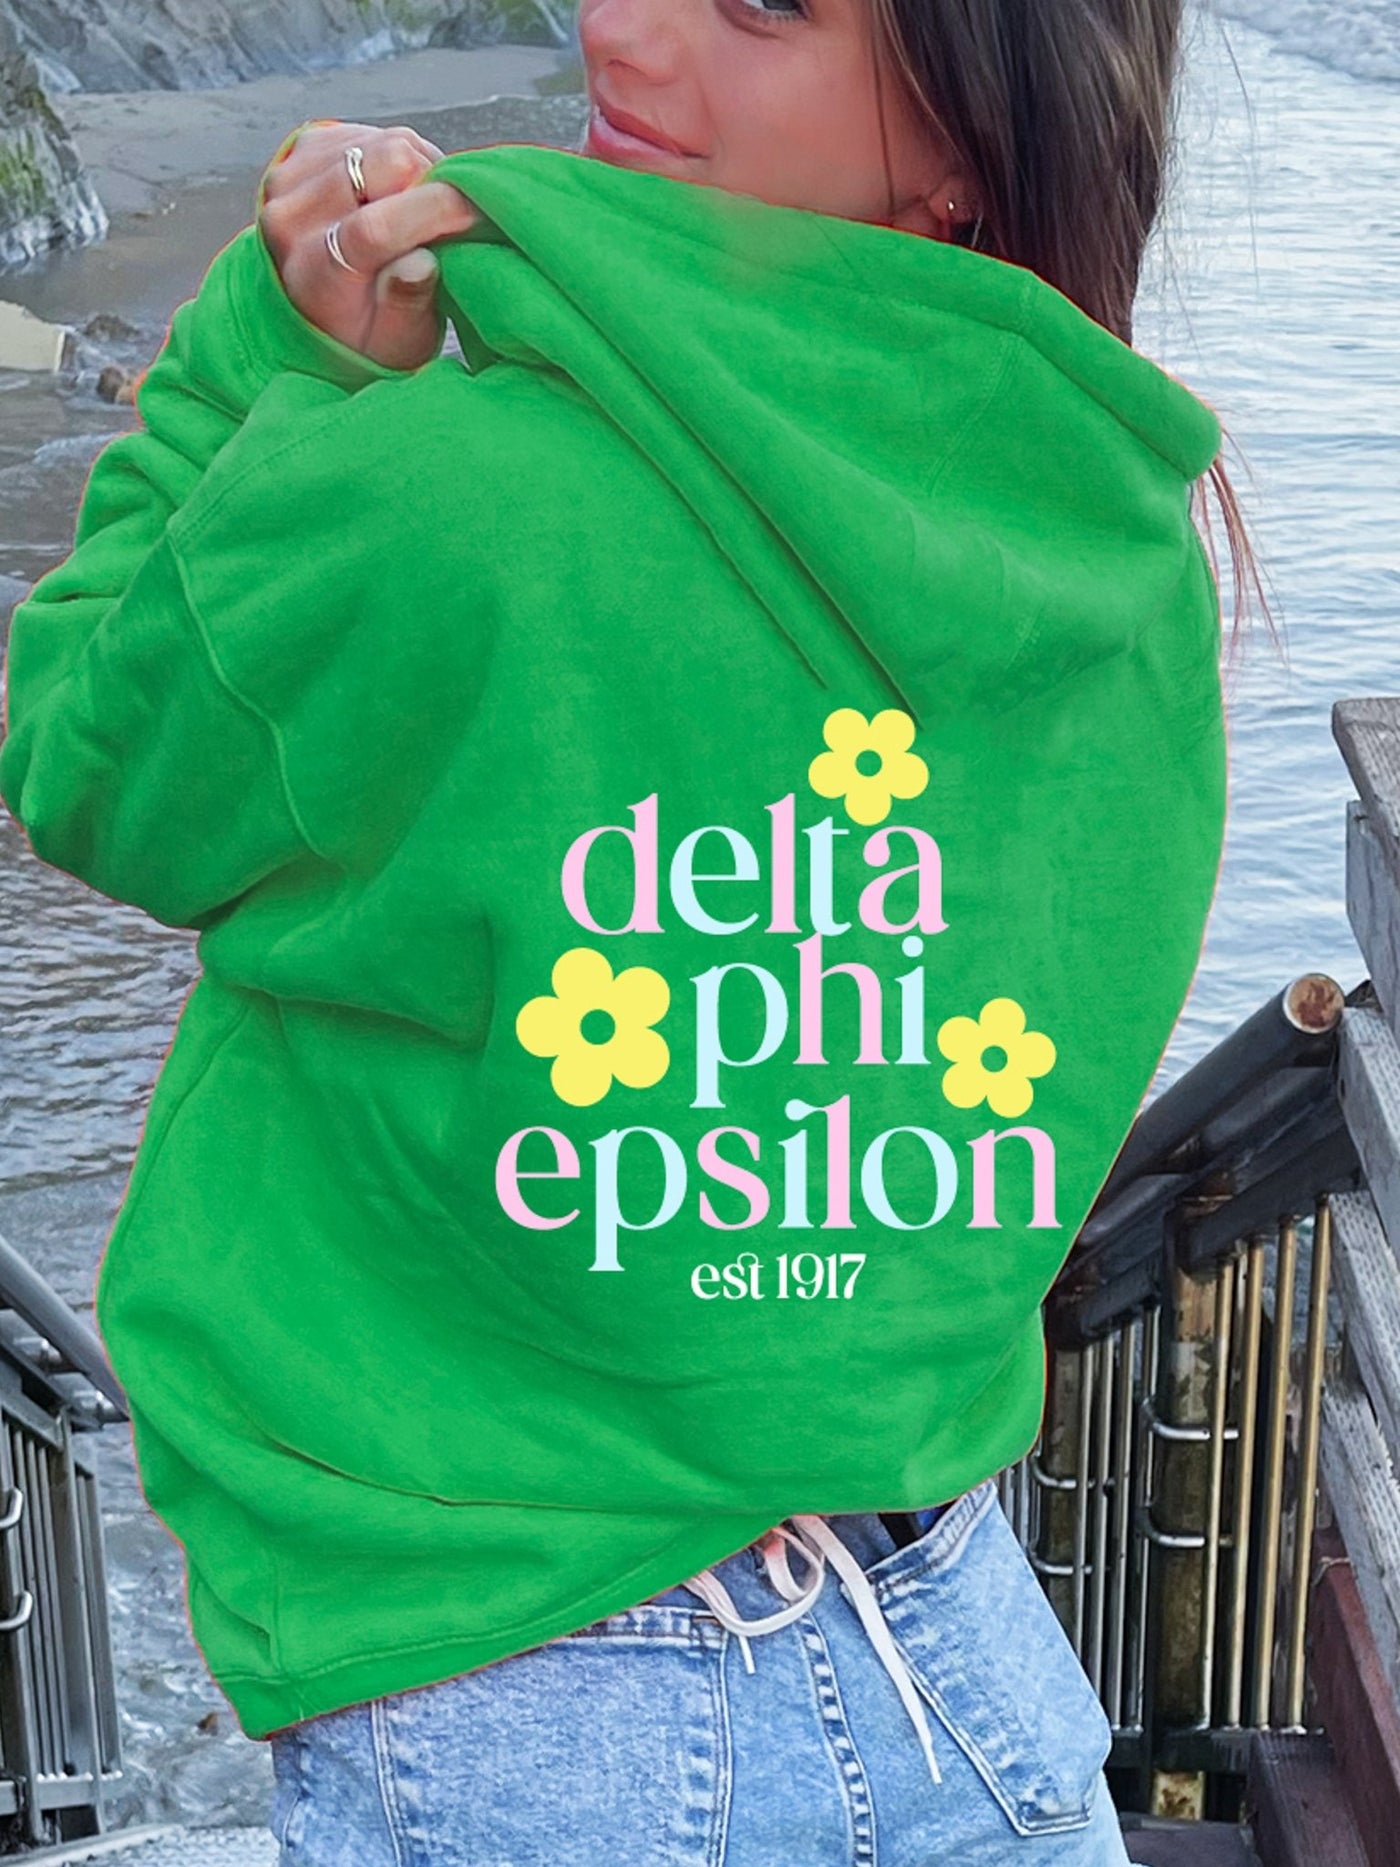 Delta Phi Epsilon Flower Sweatshirt, DPhiE Sorority Hoodie